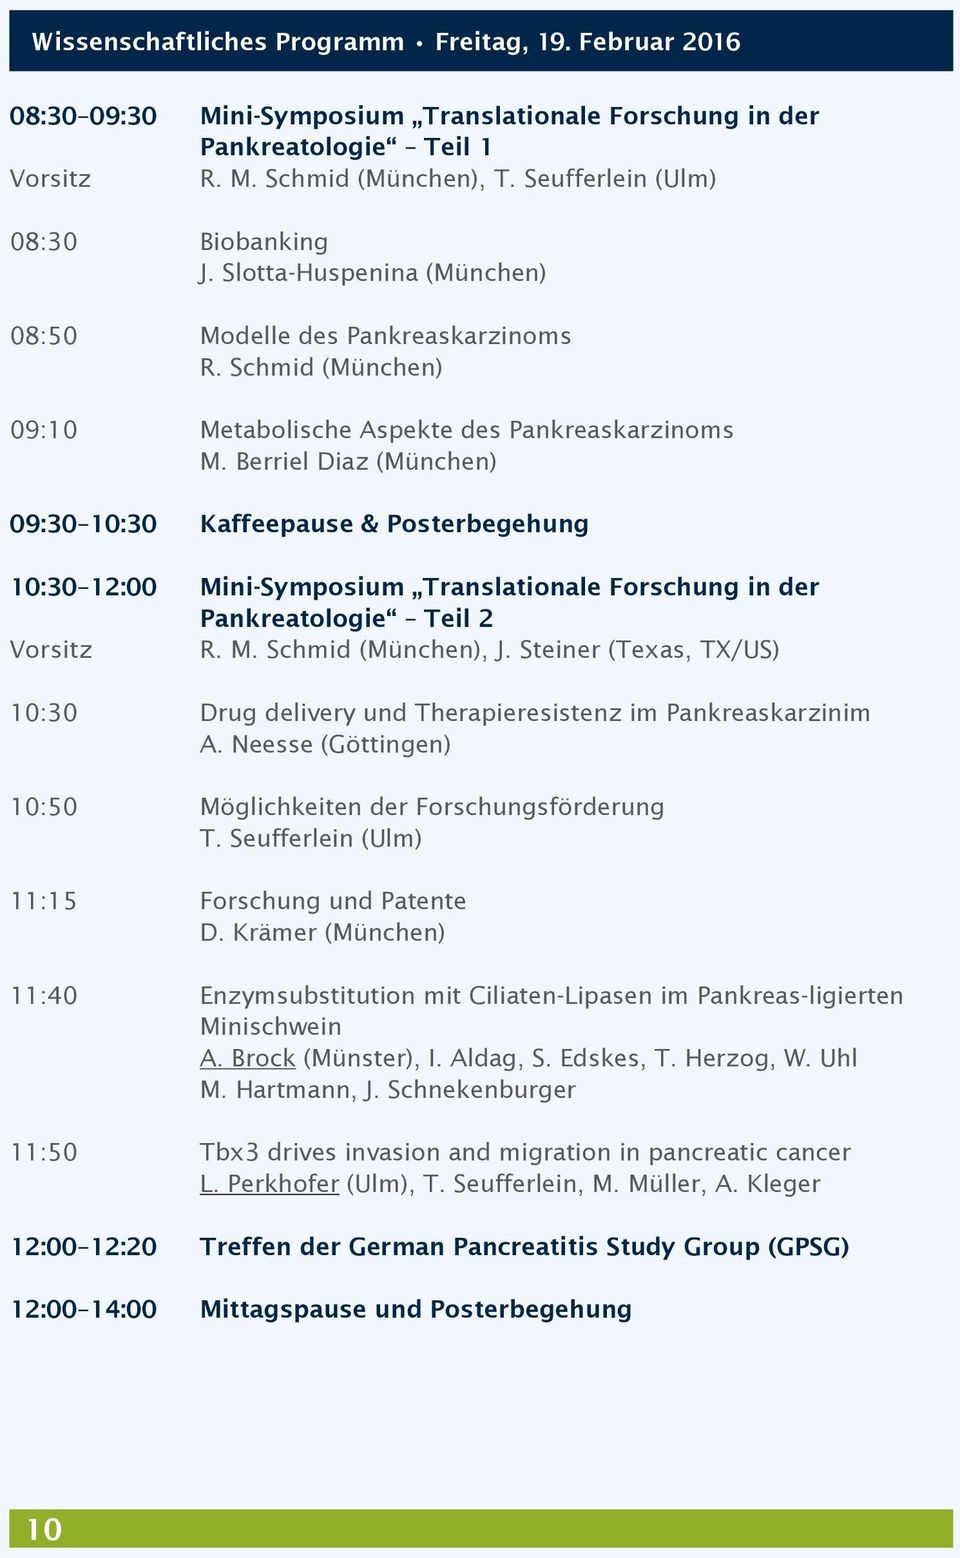 Berriel Diaz (München) 09:30 10:30 Kaffeepause & Posterbegehung 10:30 12:00 Mini-Symposium Translationale Forschung in der Pankreatologie Teil 2 Vorsitz R. M. Schmid (München), J.